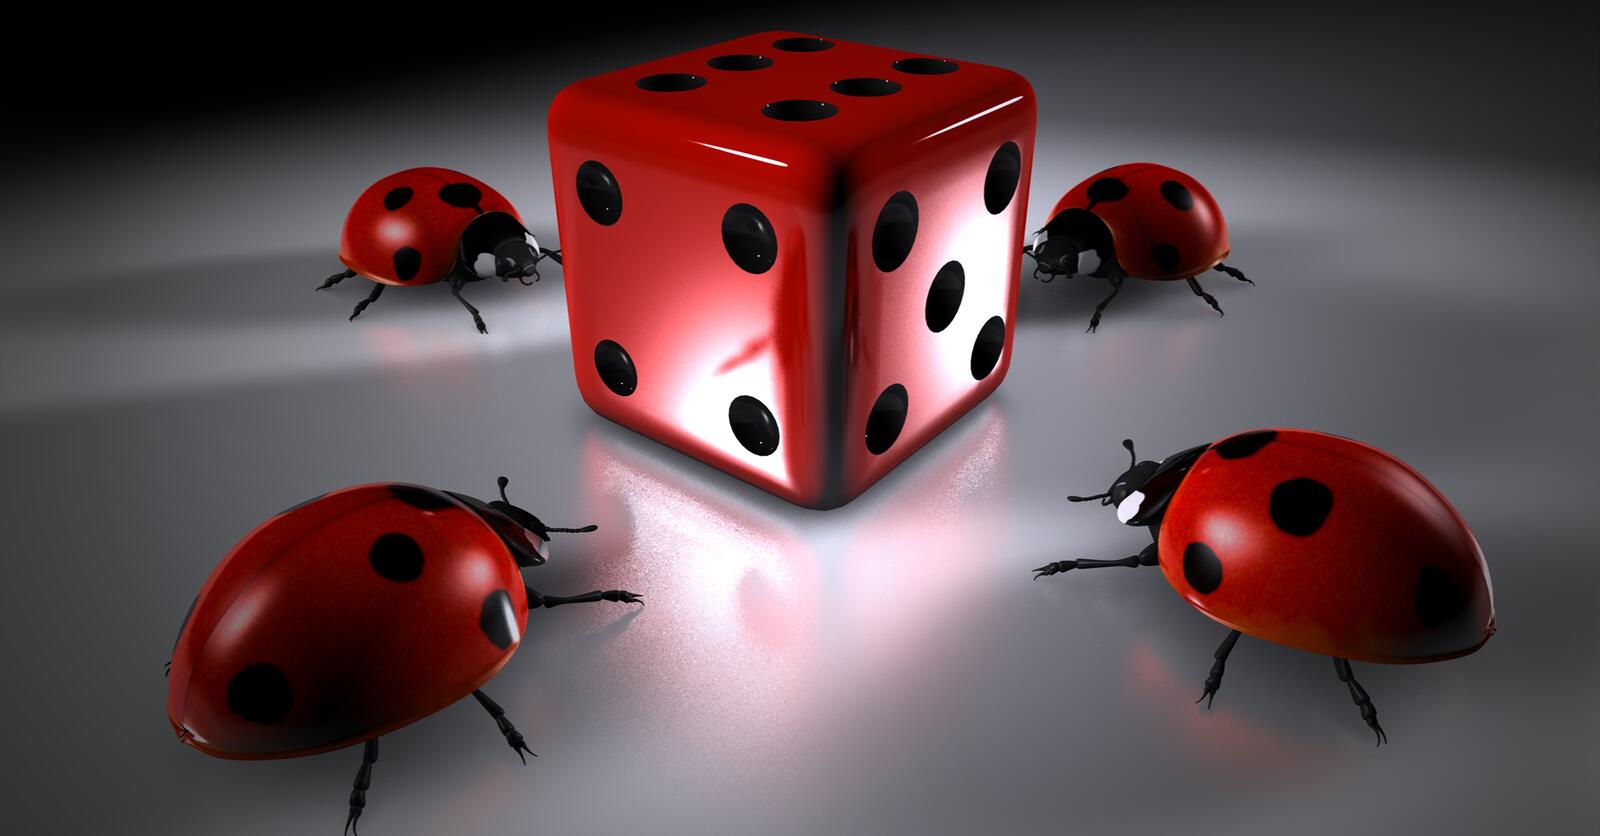 Wallpapers ladybug beetle dice on the desktop